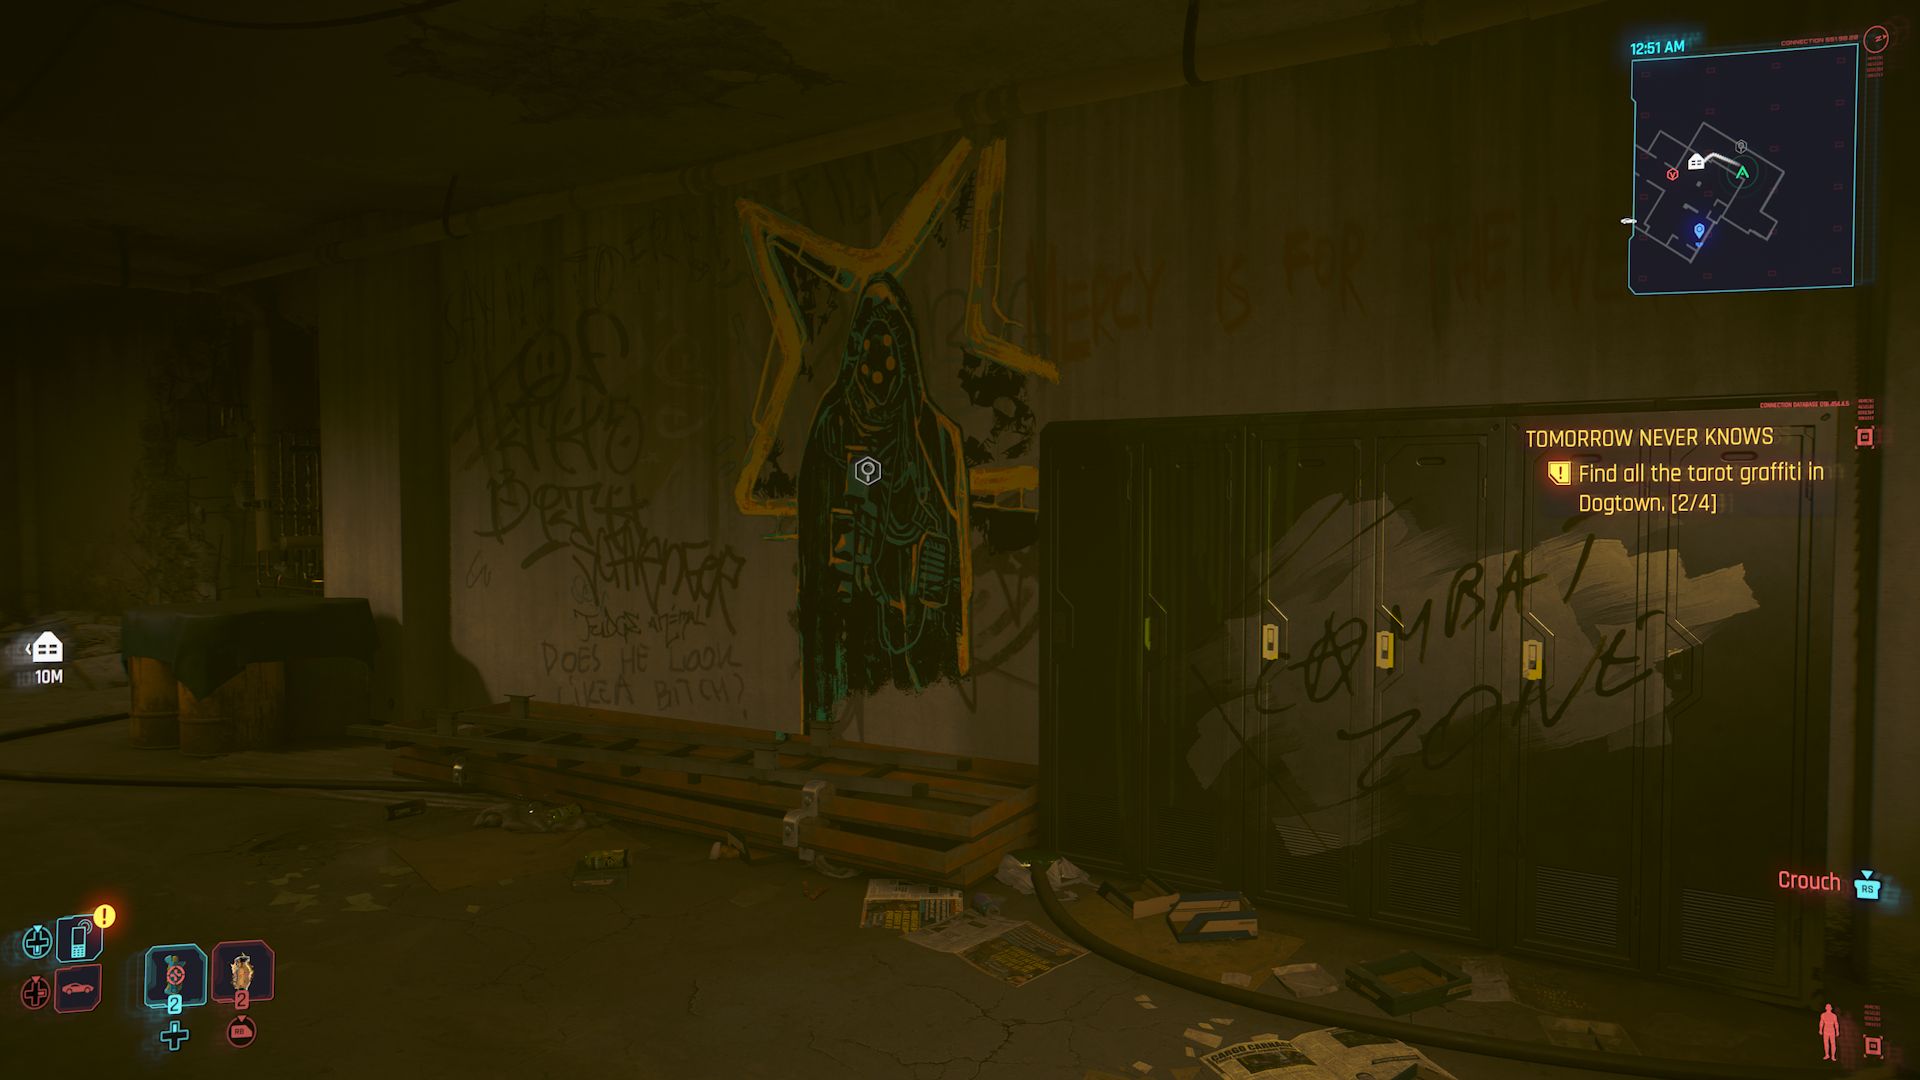 Cyberpunk 2077 Phantom Liberty Screenshot Of King Of Pentacles Graffiti On Wall Next To Set Of Lockers